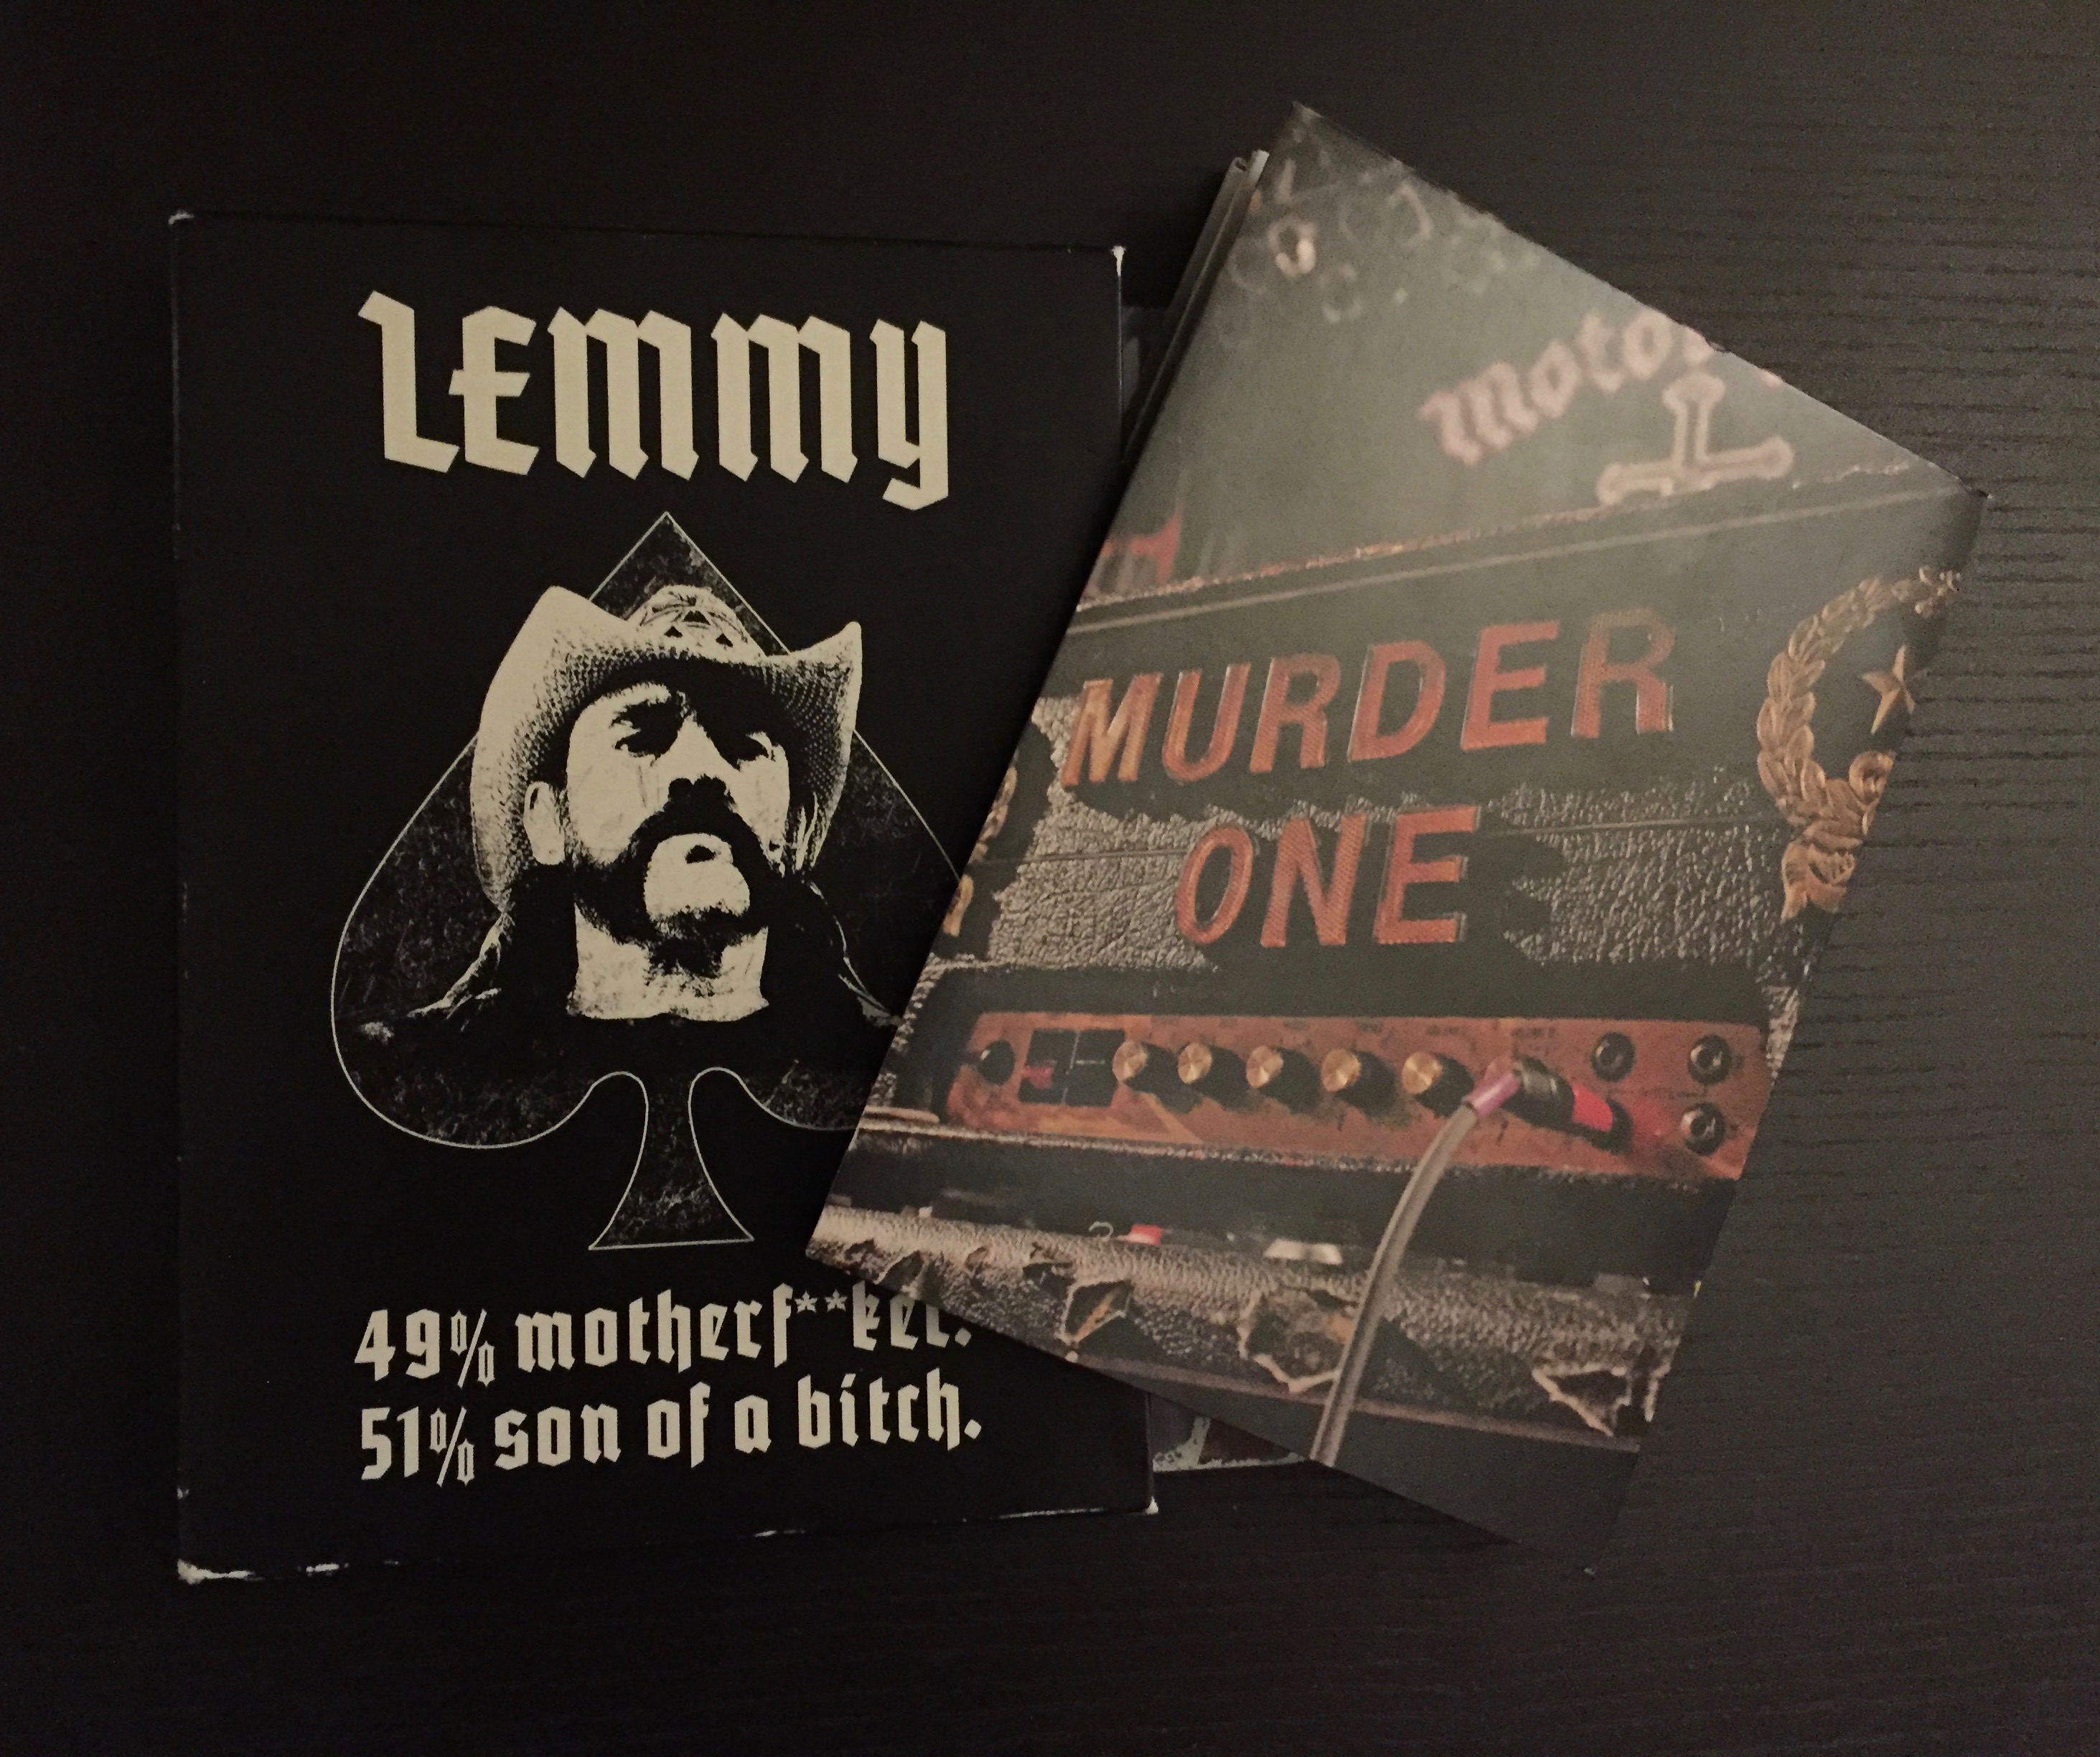 Lemmy（Motorhead）が打ち立てた伝説の裏側で愛された人柄が心に沁みた：『極悪レミー』鑑賞記 OVERKILL EDITION（初回限定版）編  | MeWiseMagic.net